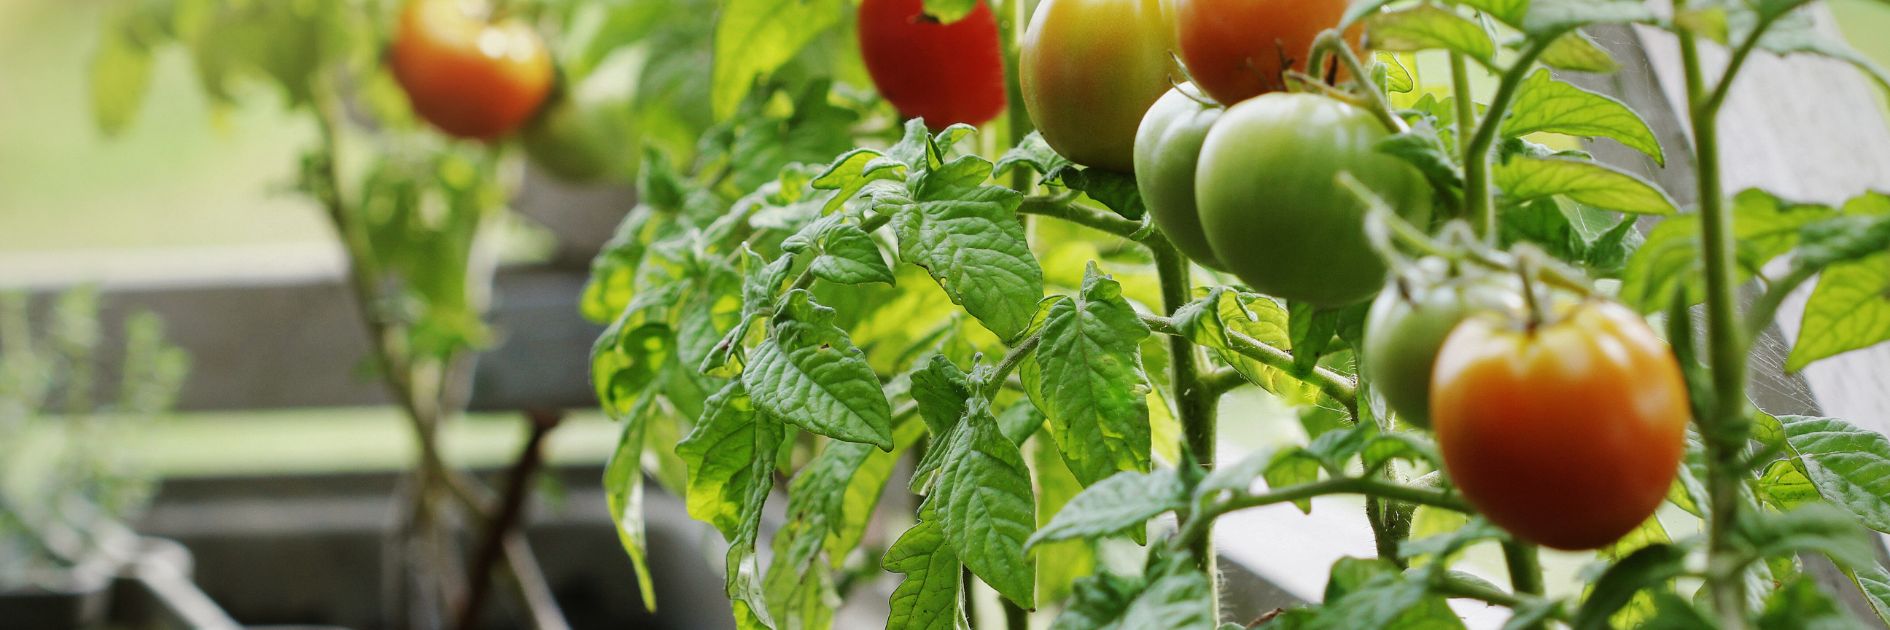 Tomaten aus Biosaatgut auf dem Balkon